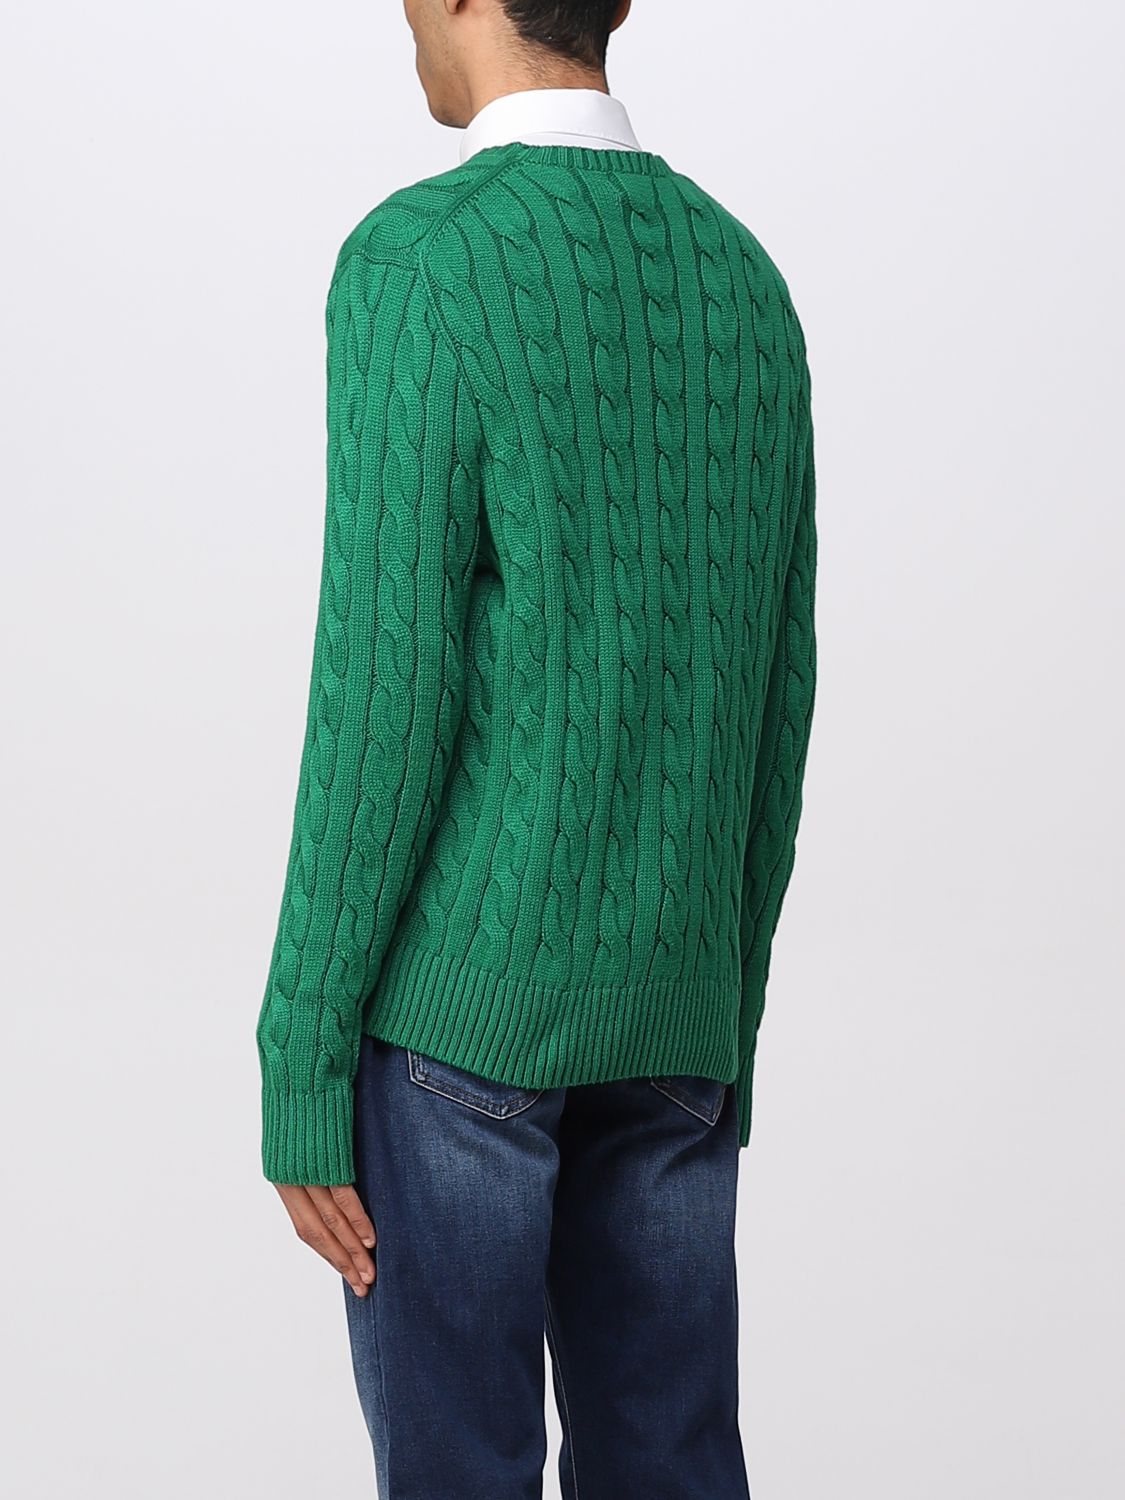 POLO RALPH LAUREN: sweater for man - Green | Polo Ralph Lauren sweater  710775885 online on 